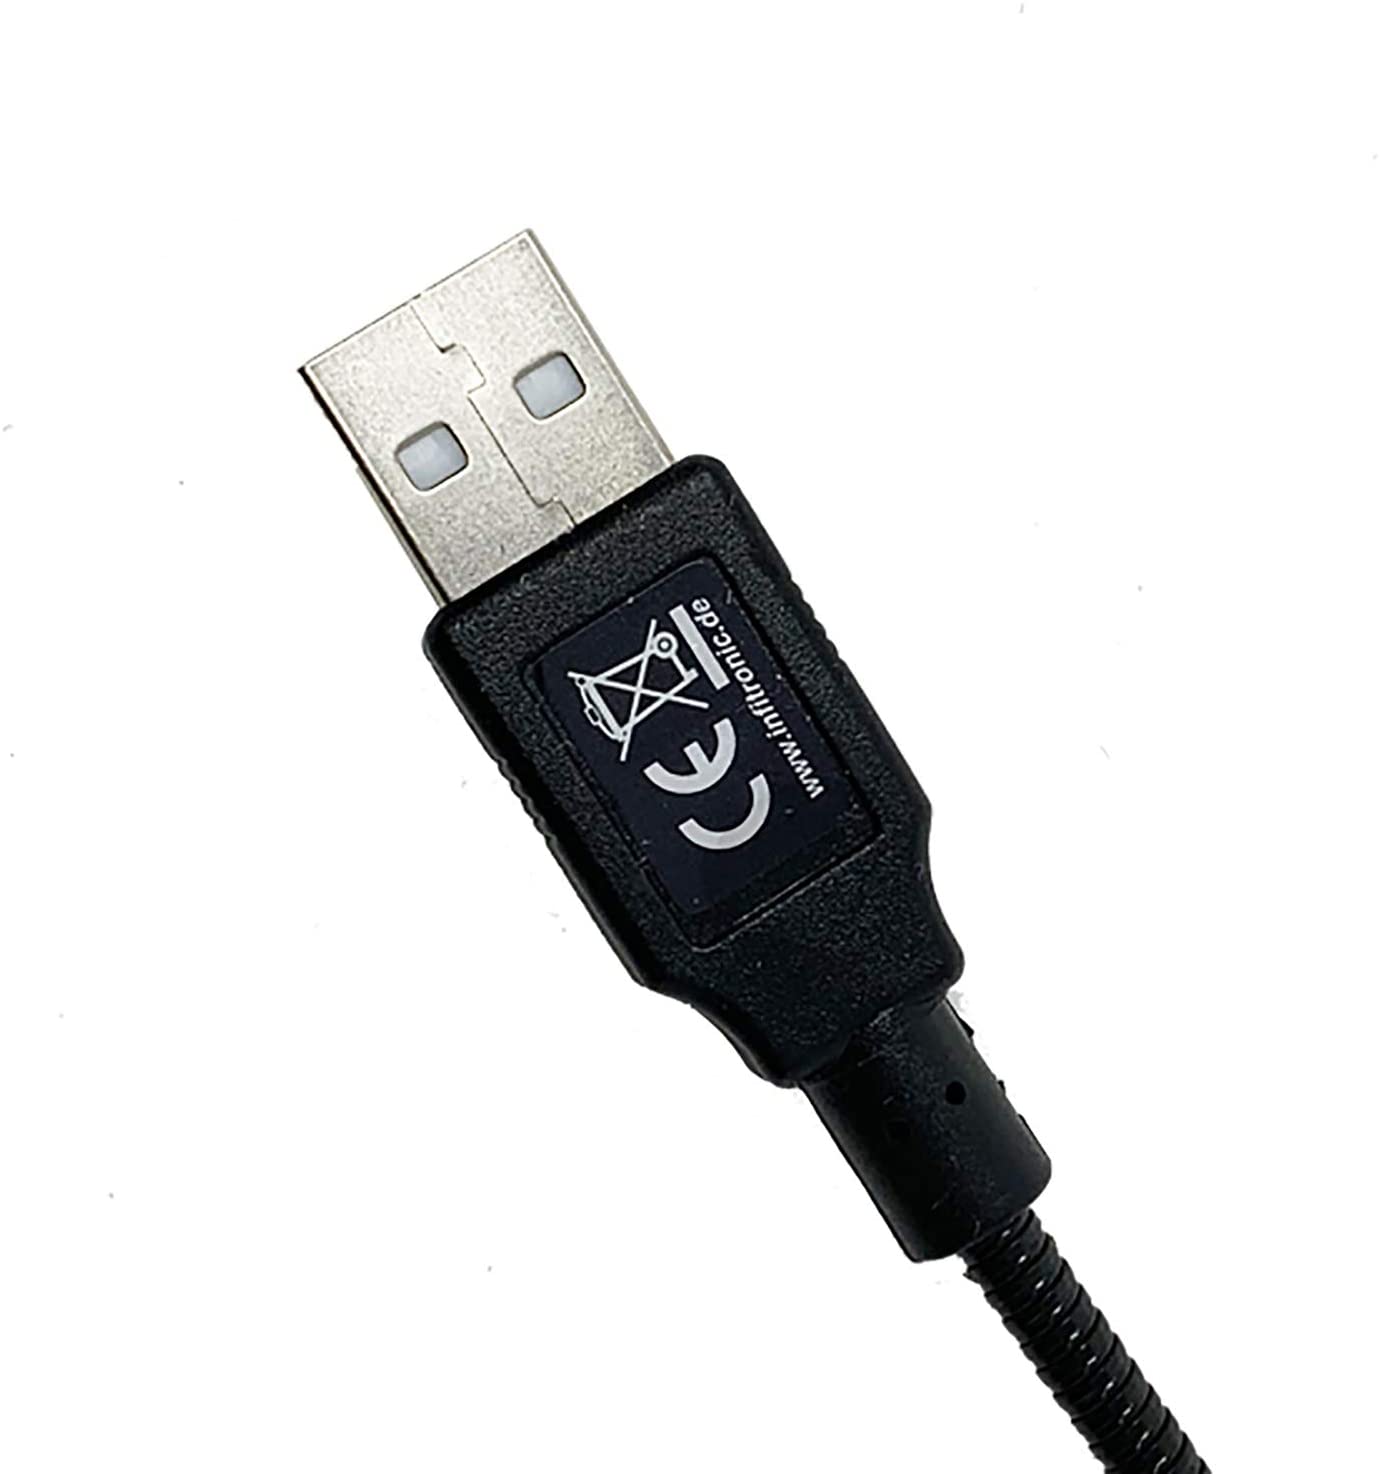 IN3LED1USBM - Multicolor USB Lampe USB Leuchte Schwanenhalsleuchte  Tastaturlampe für PC Laptop - Infitronic GmbH